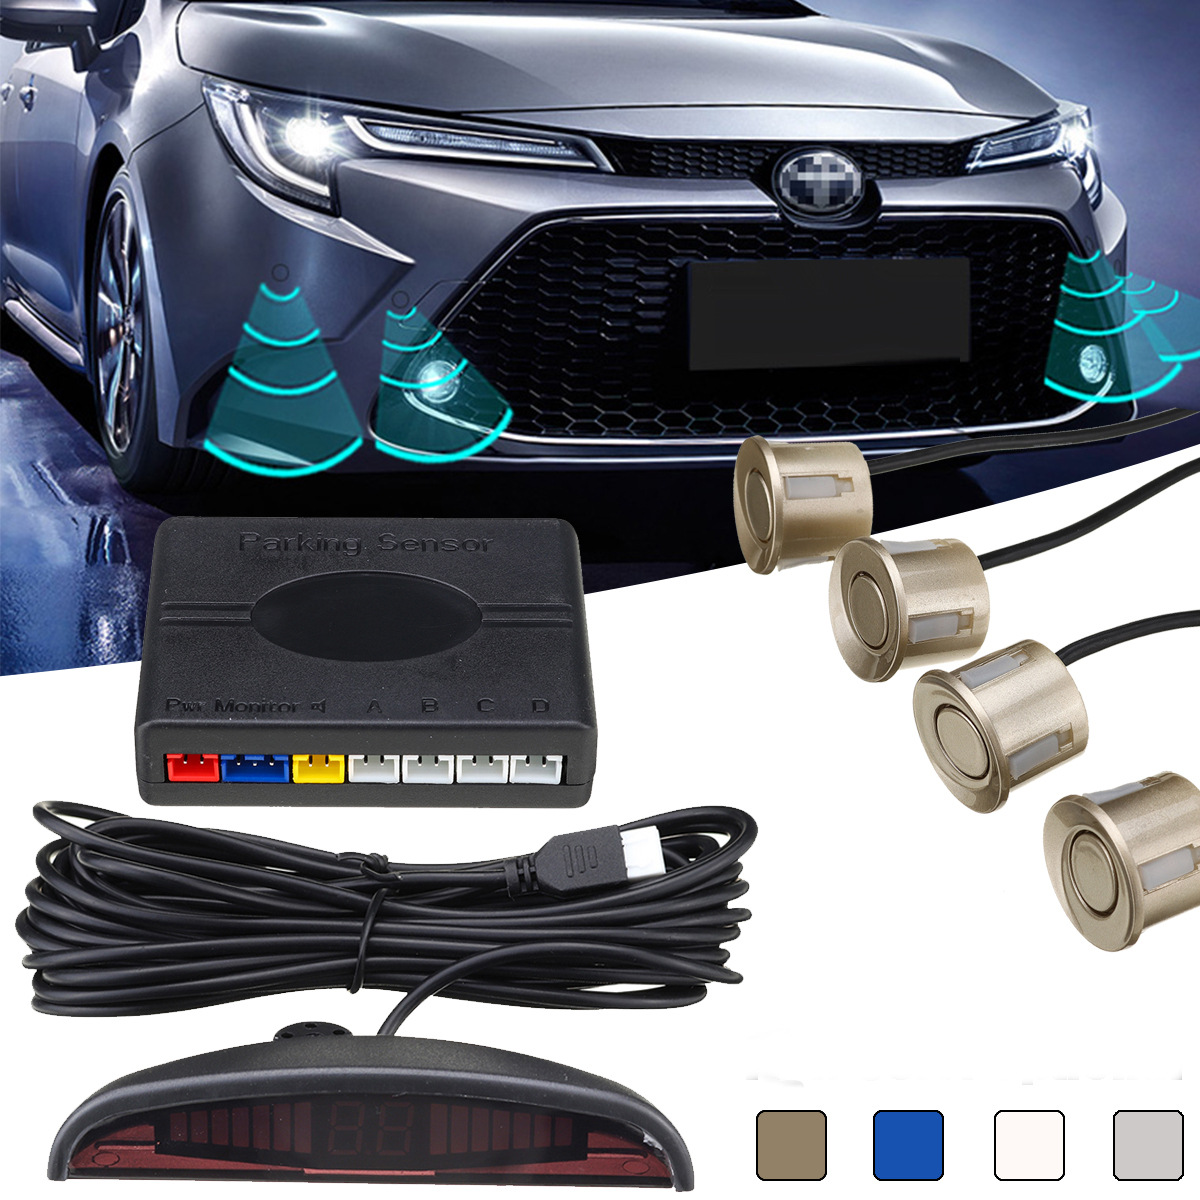 

4 X Parking Sensor Car Reverse Backup Front and Rear Buzzer Alarm Parking System